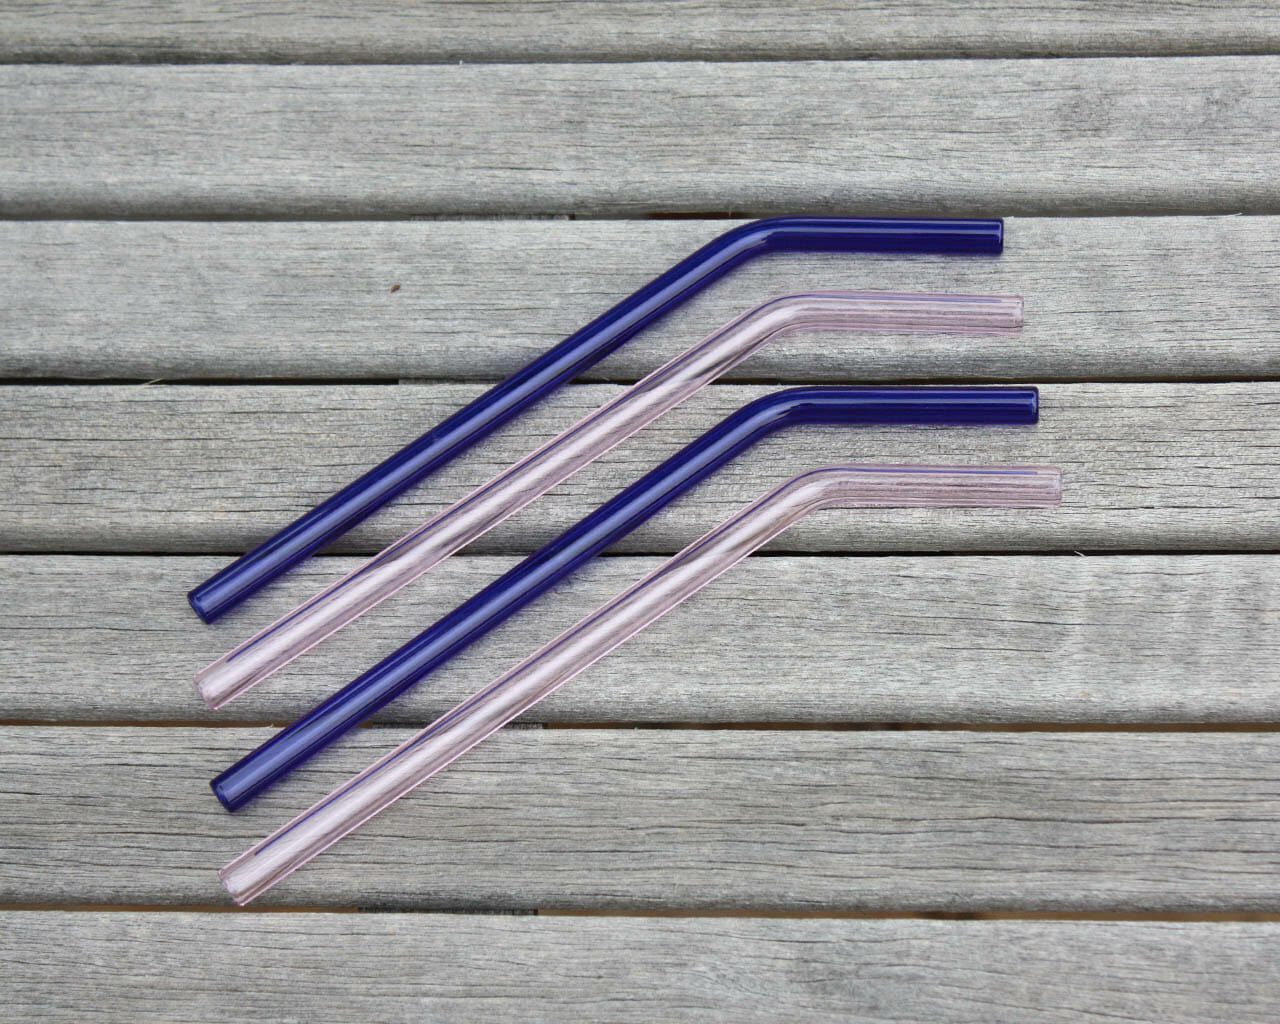 bent reusable glass straw